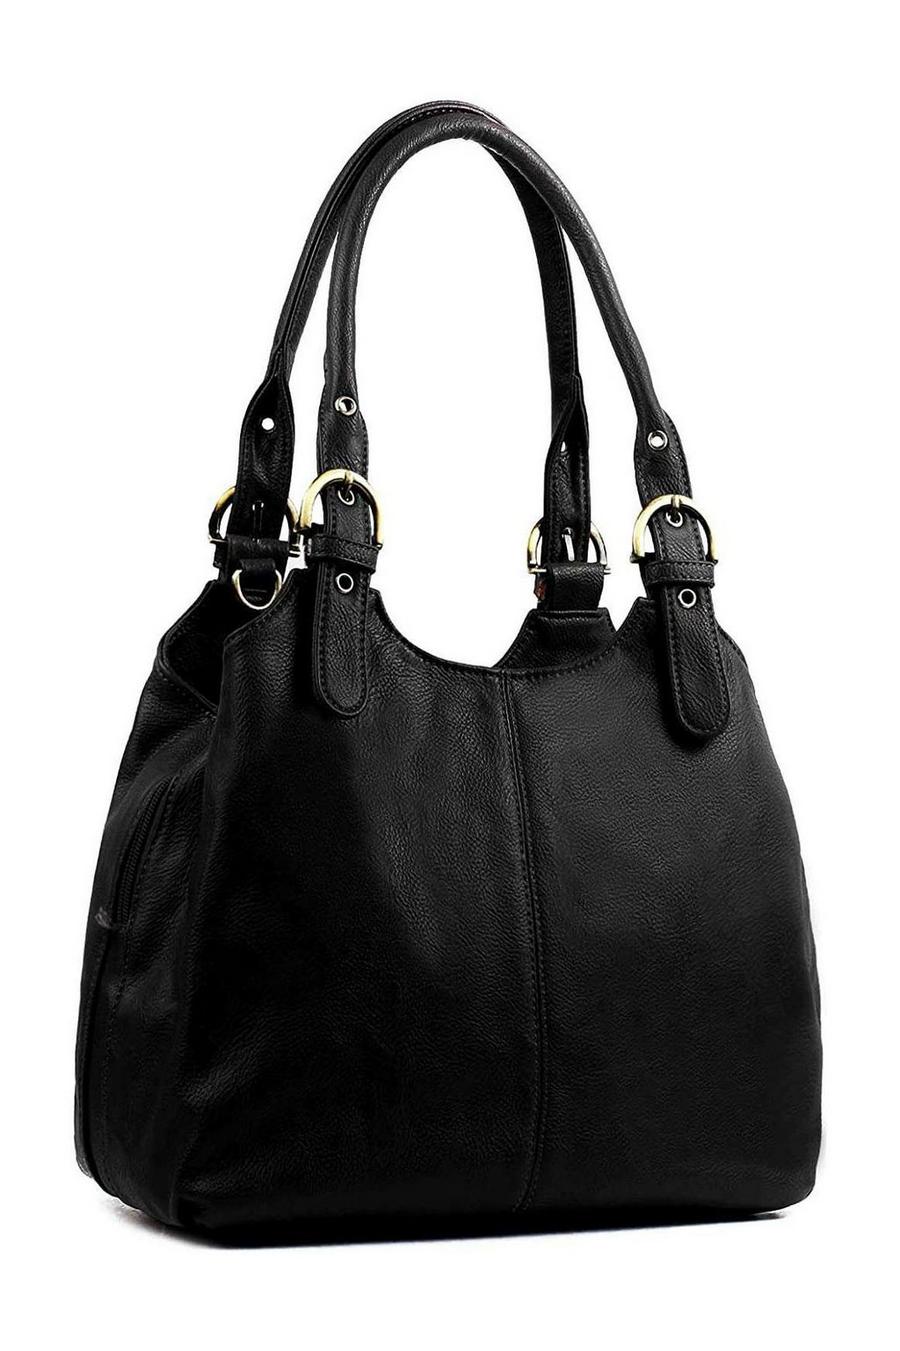 Black Tri-Compartments Tote Handbag Shoulder Bag with Detachable Strap image number 1